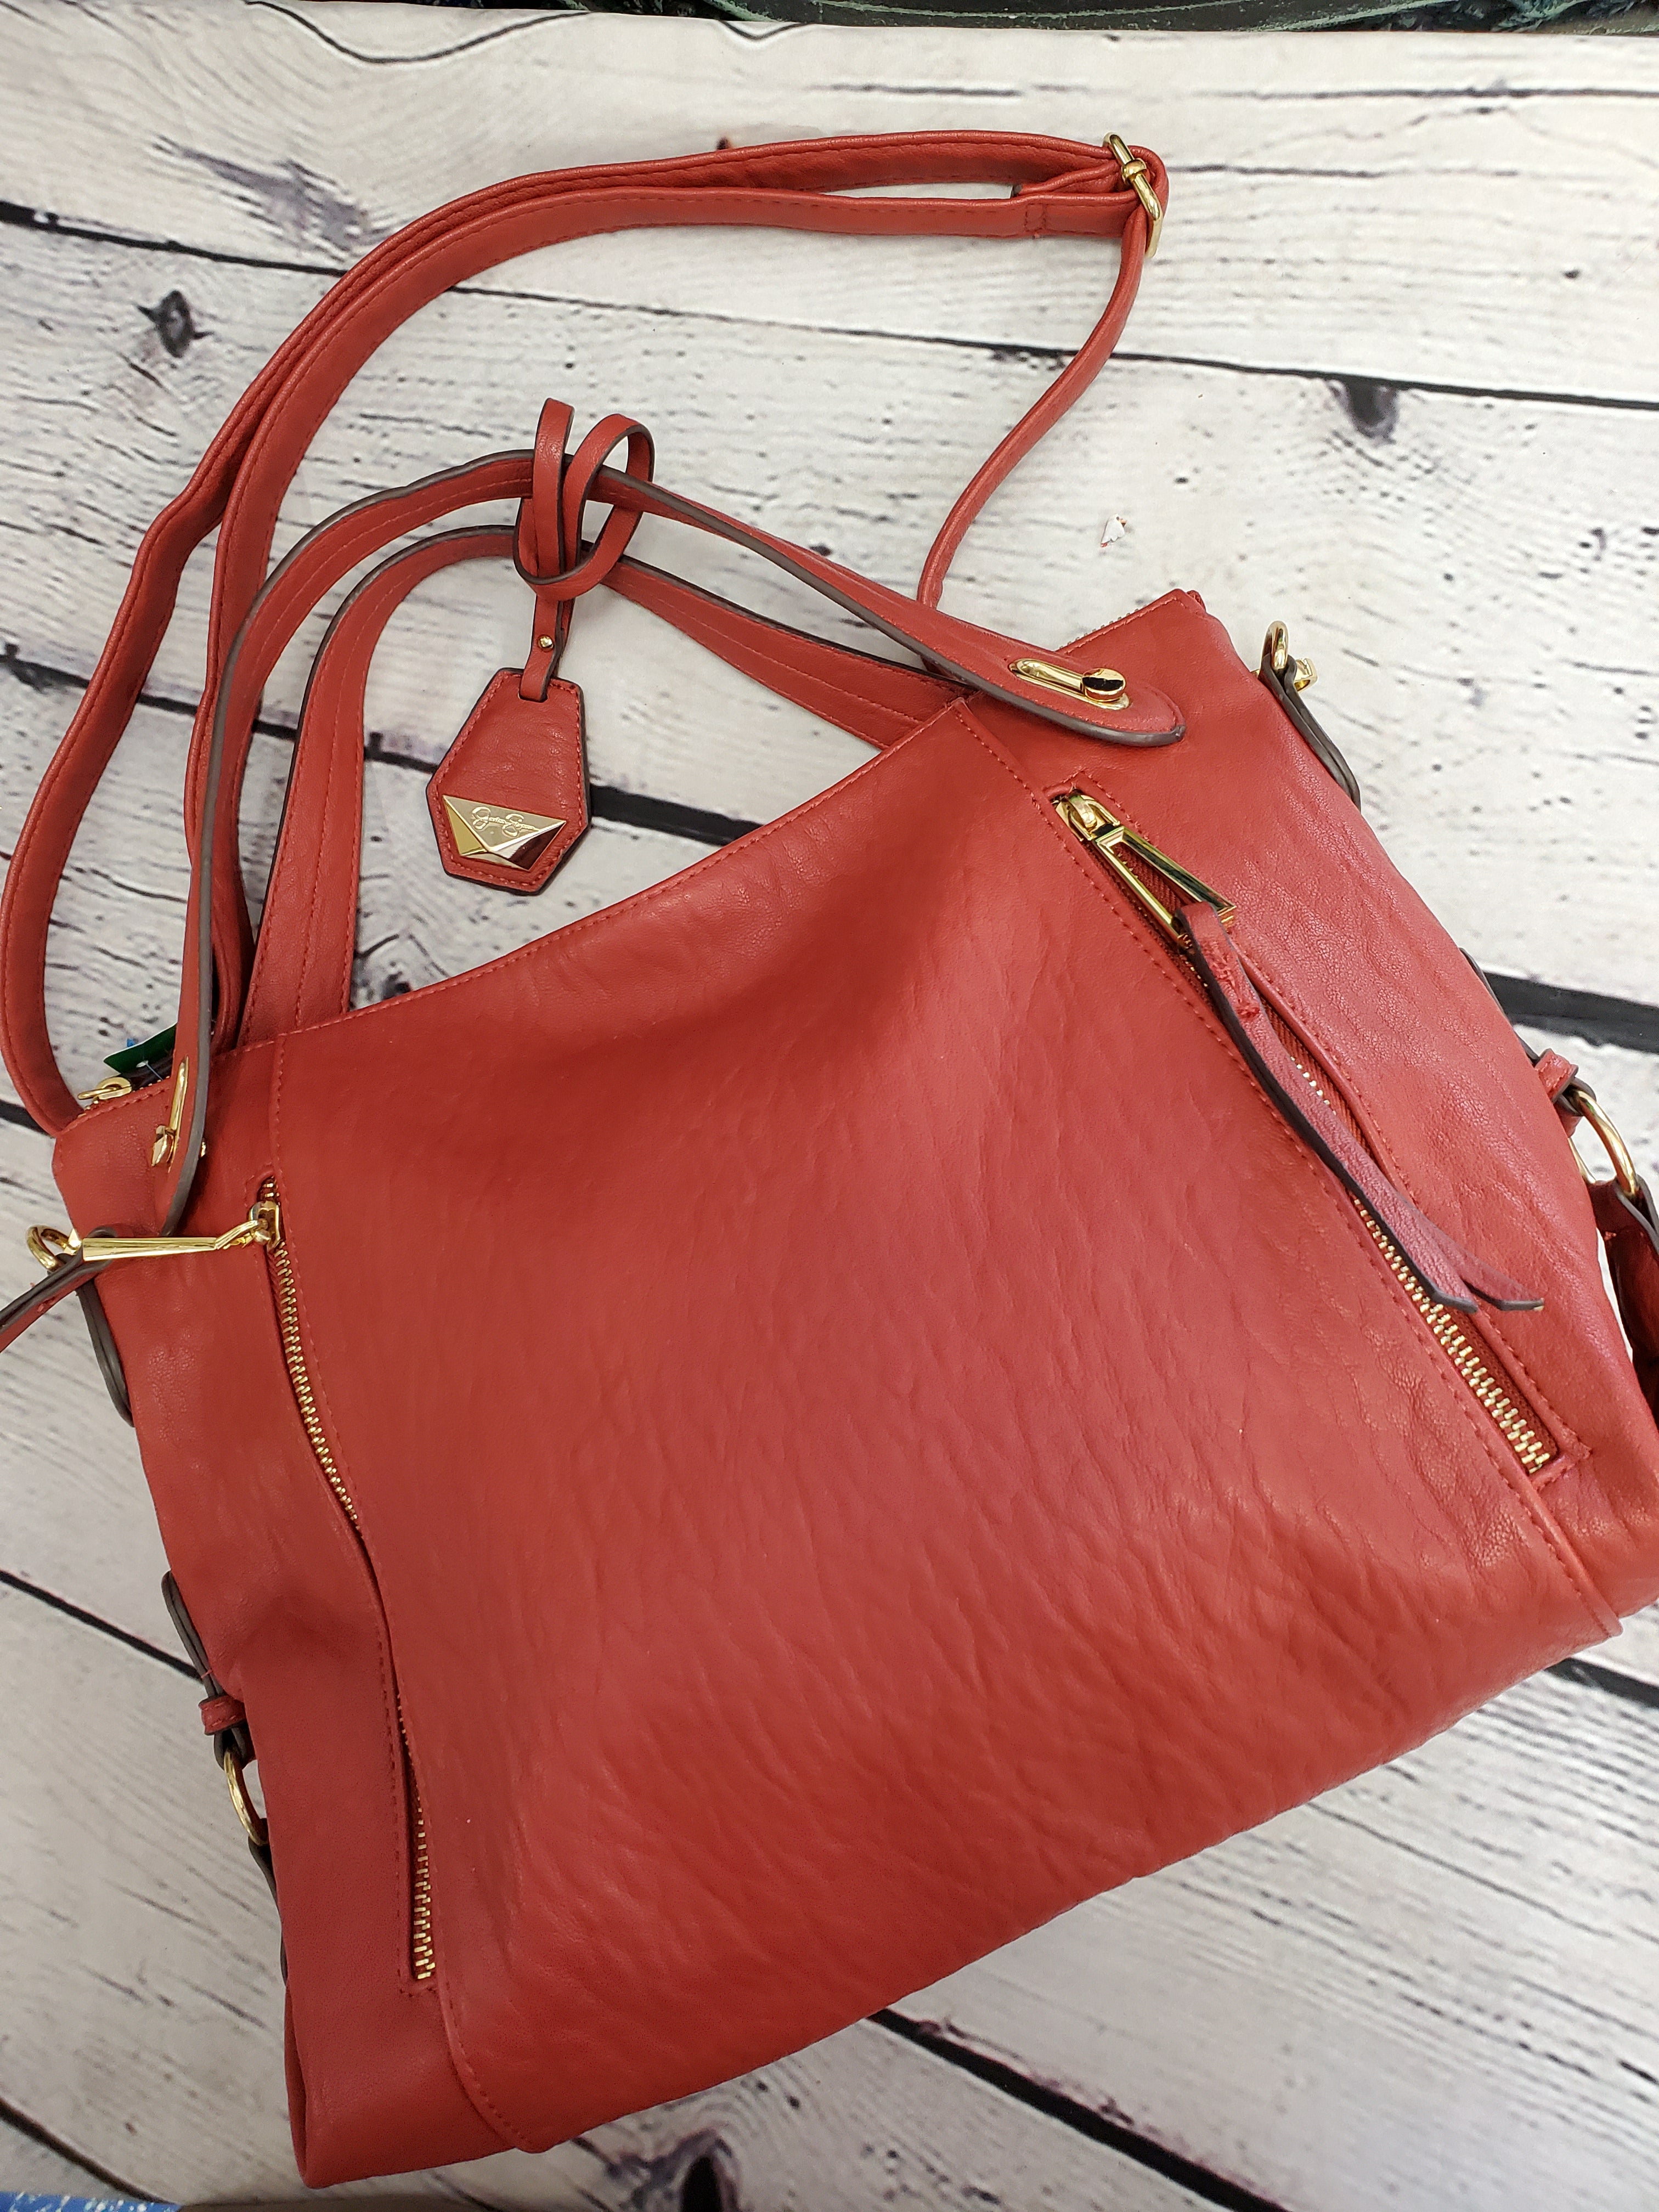 Jessica Simpson handbag red